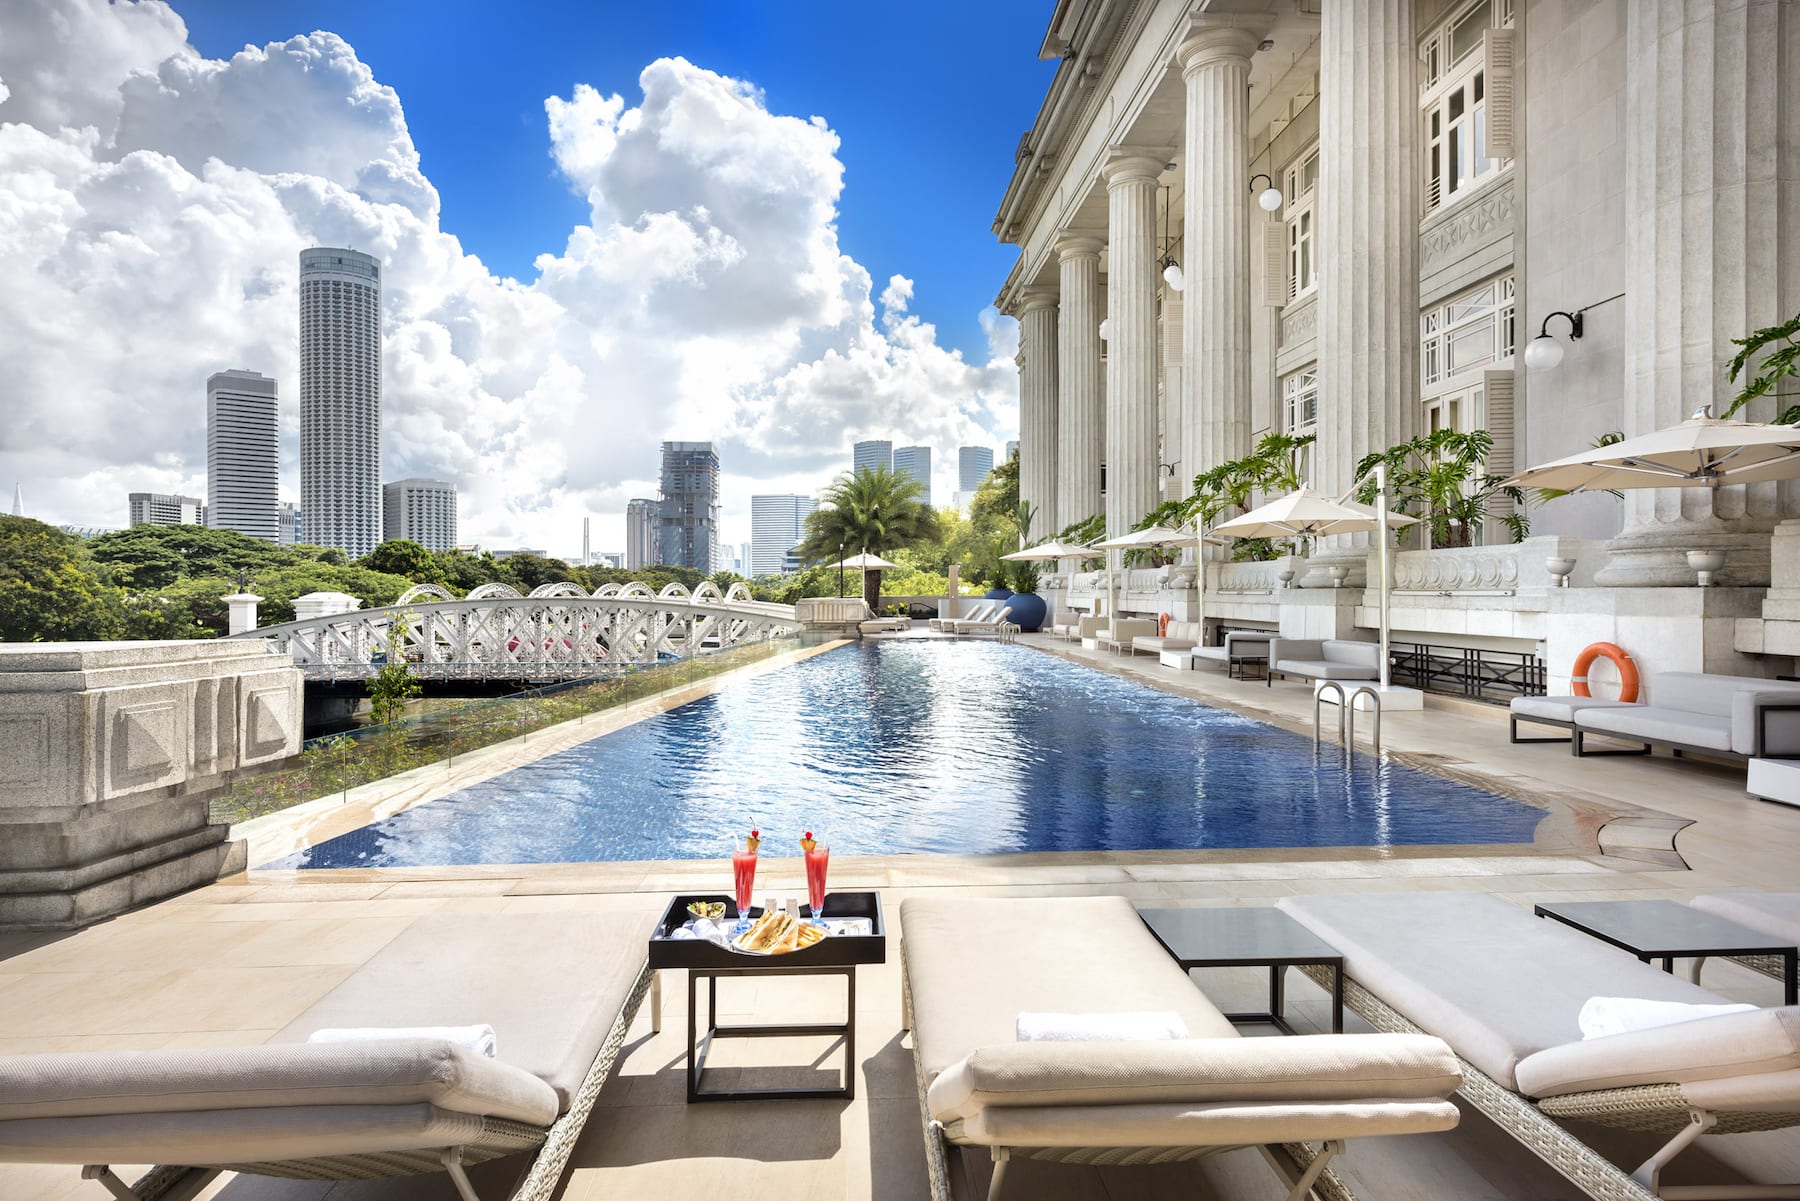 https://uluxeimages.uniqluxe.com/2020/08/the-fullerton-hotel-singapore-swimming-pool.jpg